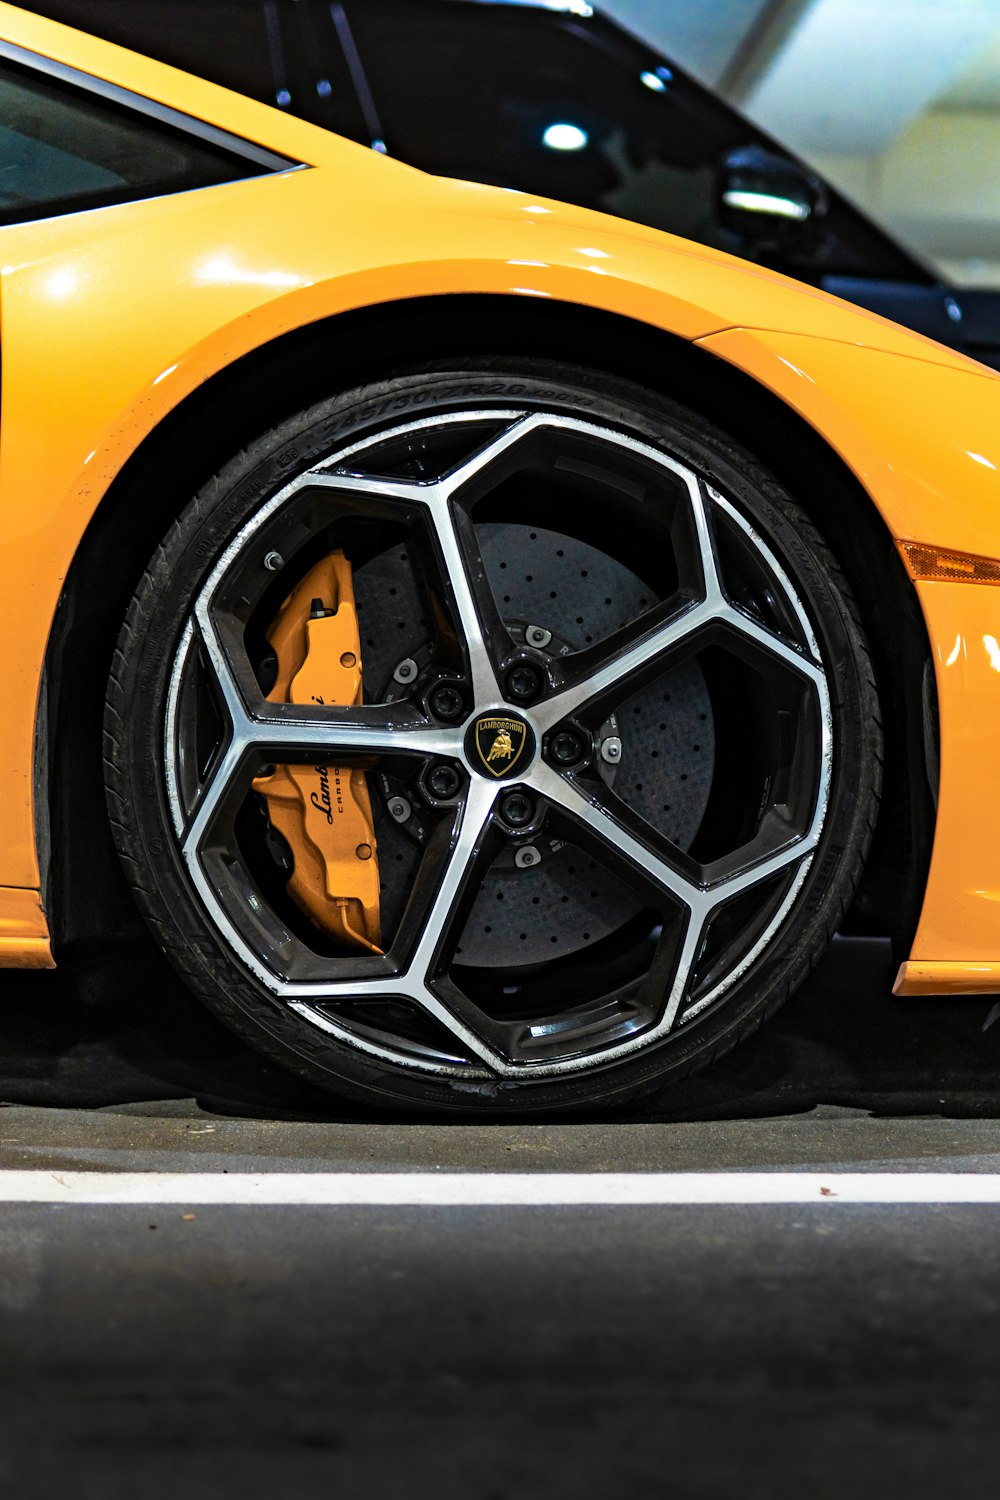 yellow and black car wheel